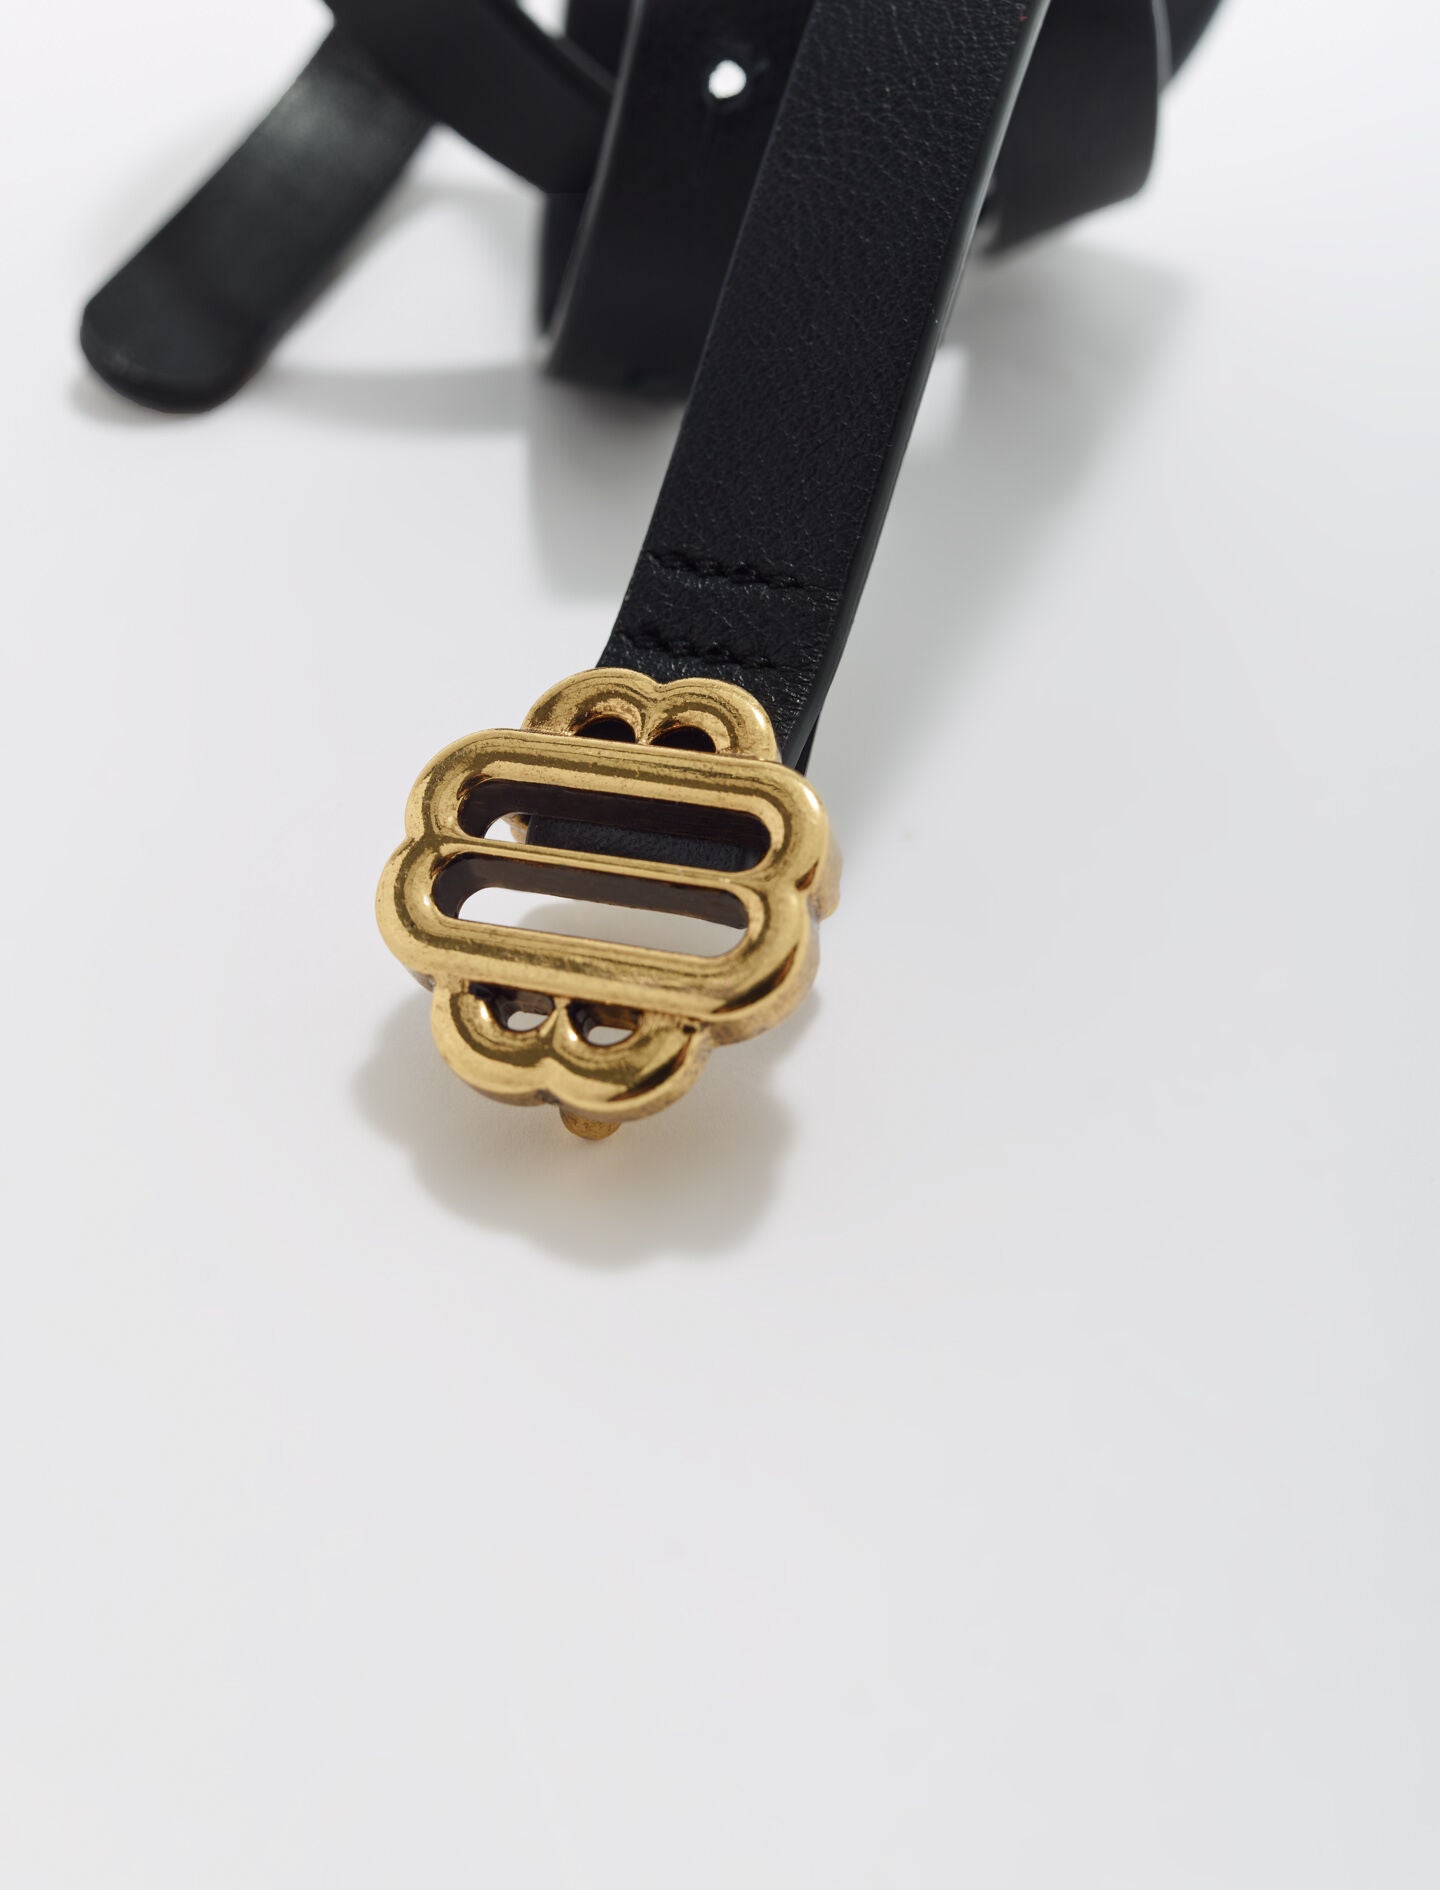 Black-narrow black leather belt gold buckle